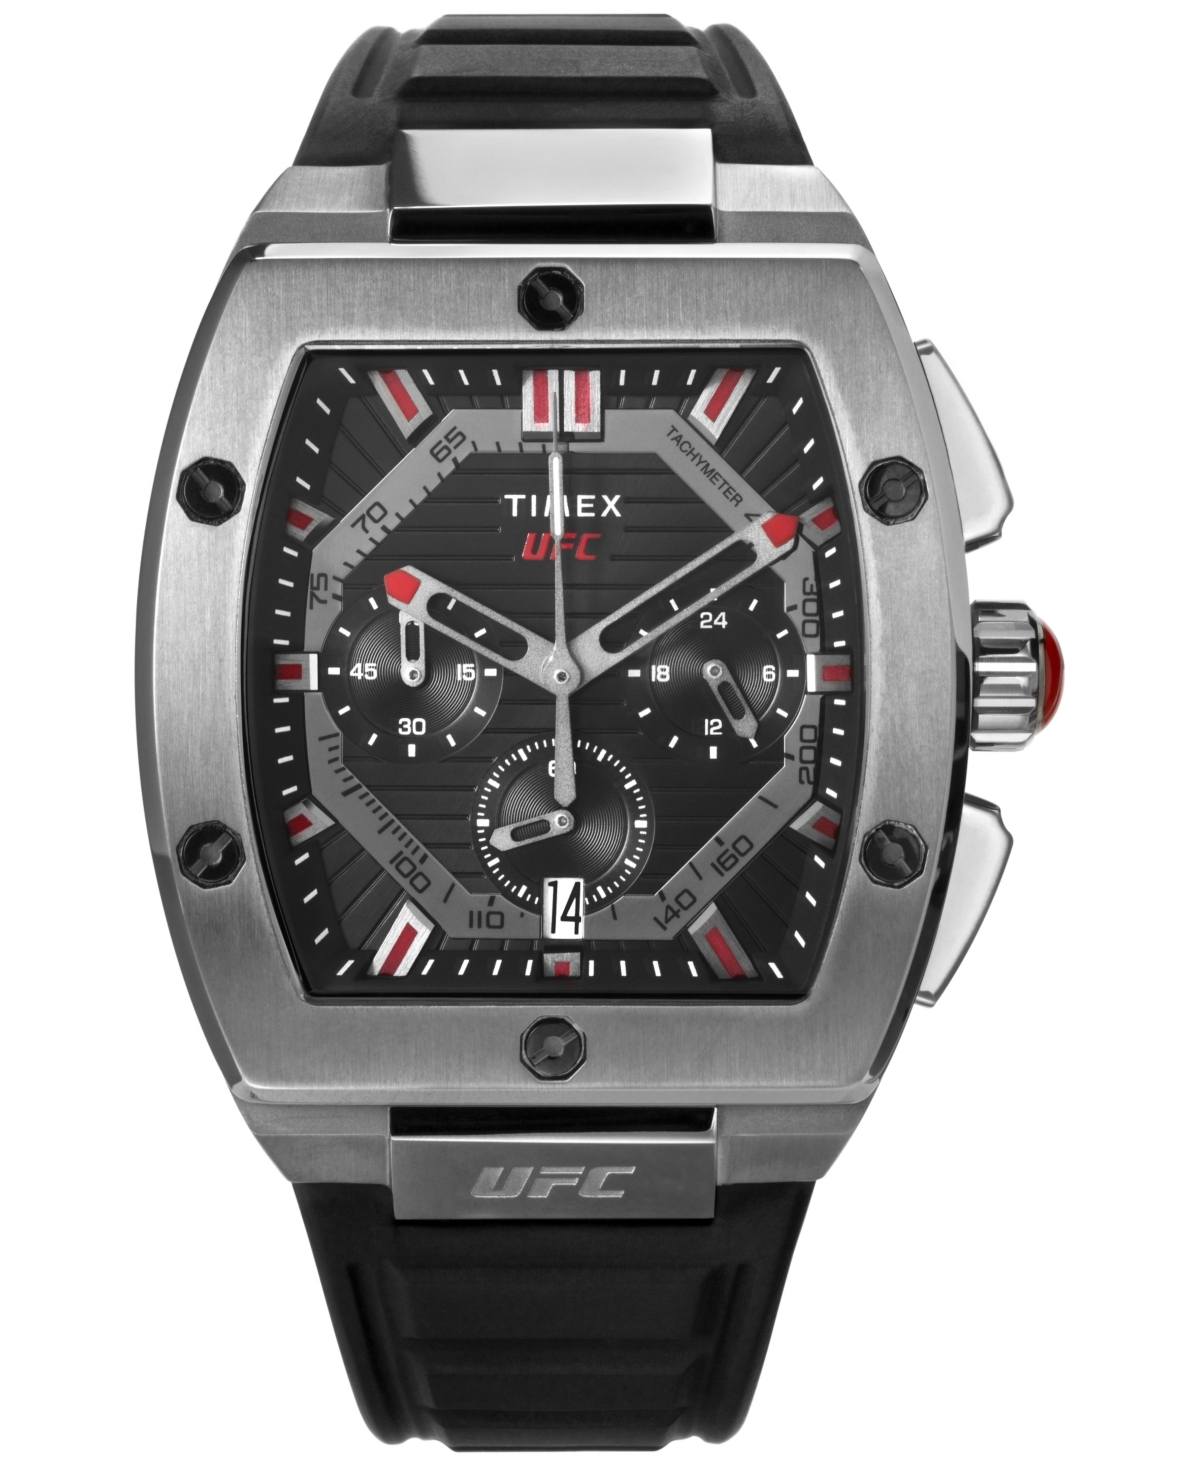 Ufc Men's Beast Analog Black Silicone Watch, 51mm - Black